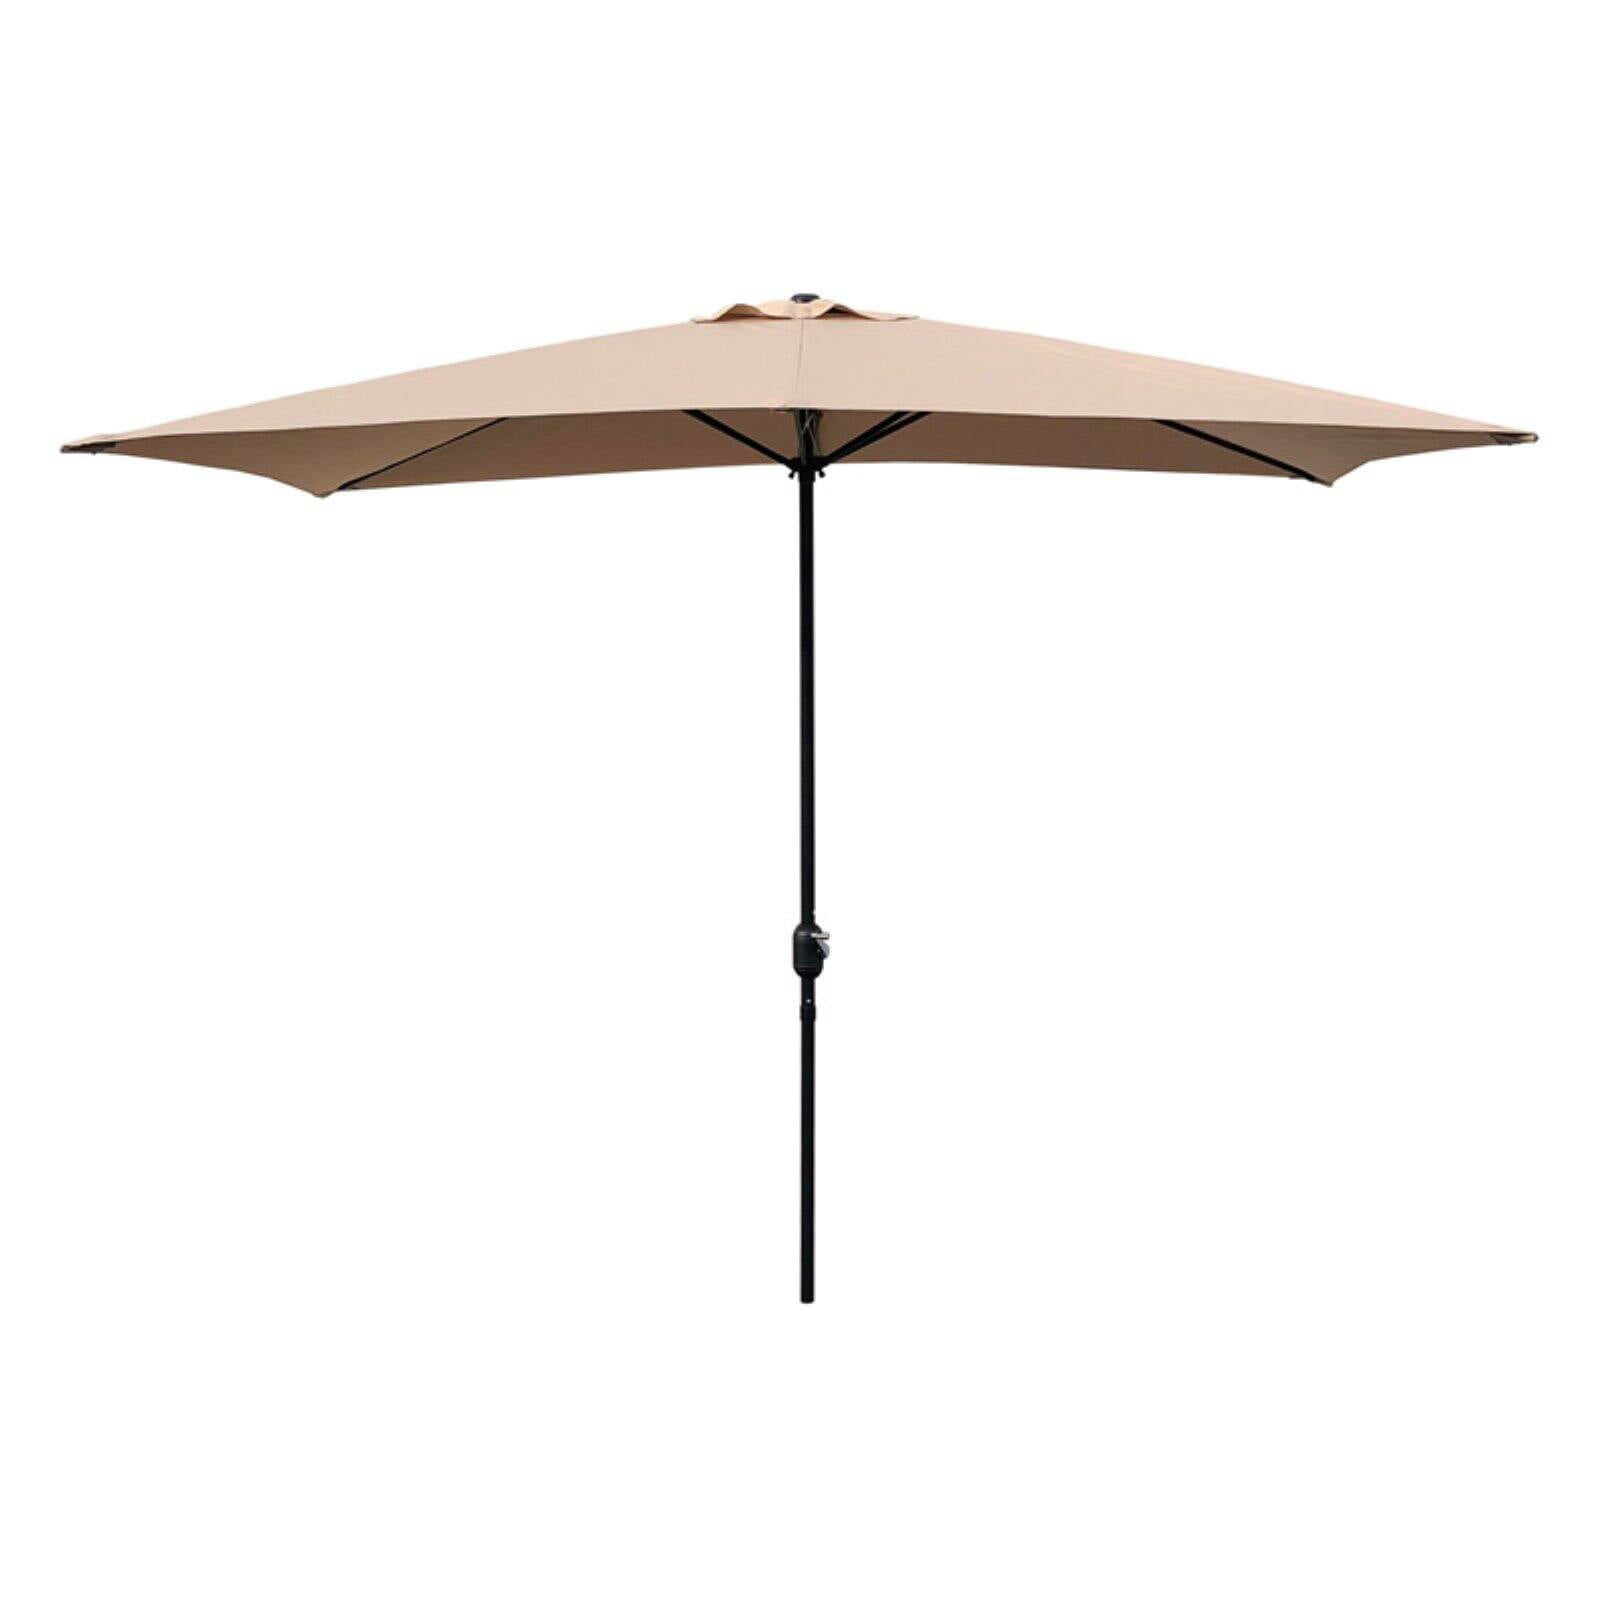 Details about   Adriatic 6.5-ft x 10-ft Rectangular Market Umbrella in Stone Olefin 